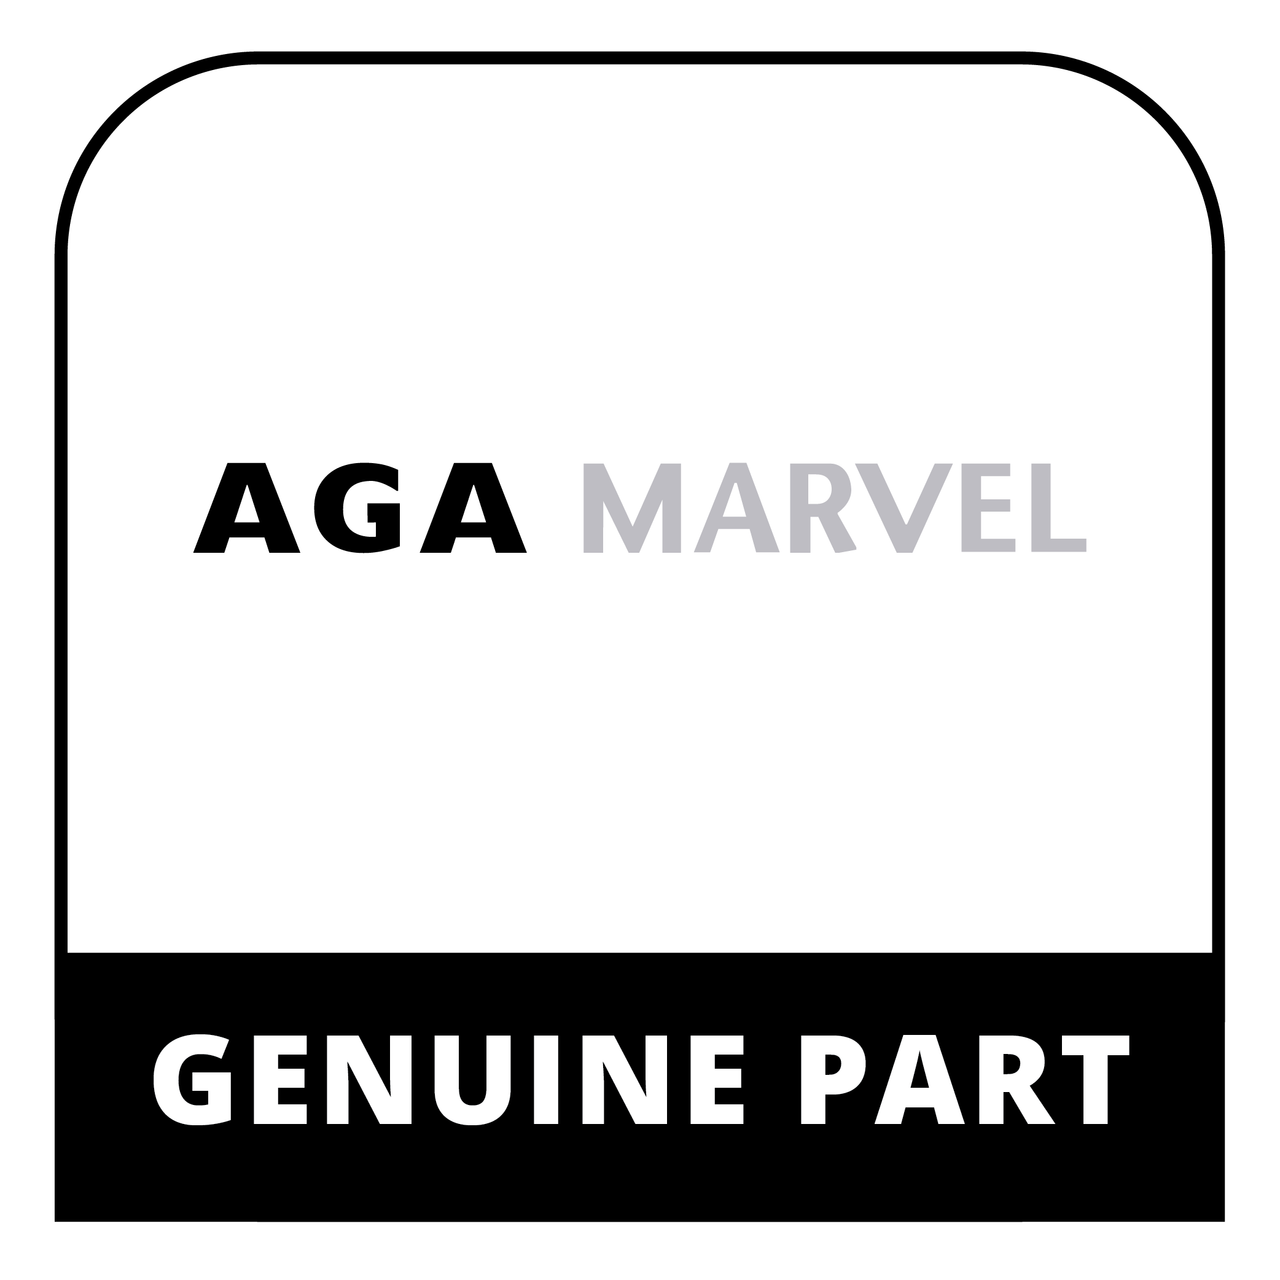 AGA Marvel R2401 - Control Cover Gd80 - Genuine AGA Marvel Part